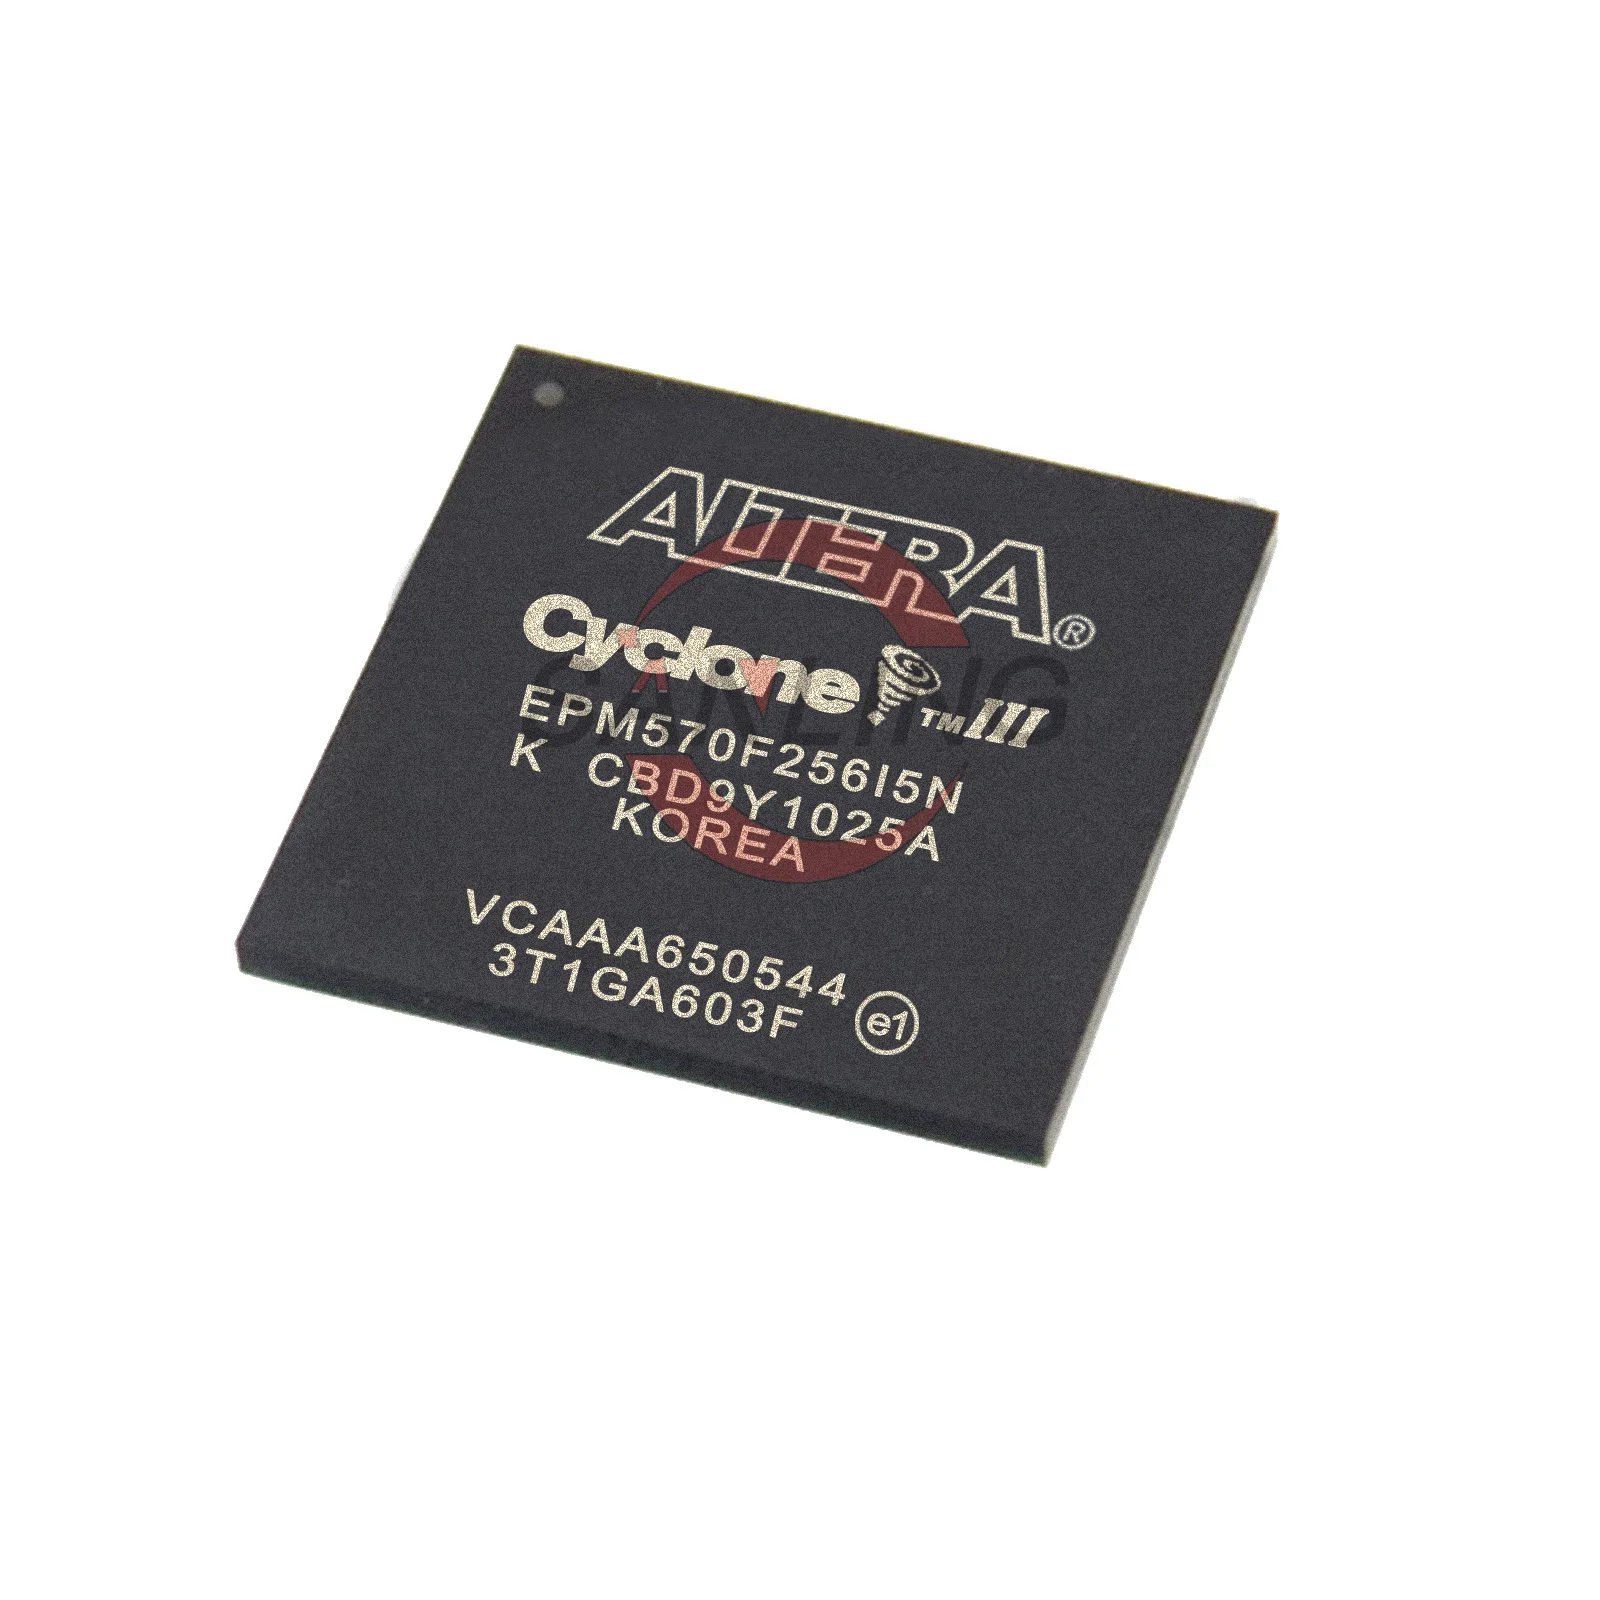 

EPM570F256I5N Package BGA256 Spot ALTERA programmable chip IC original